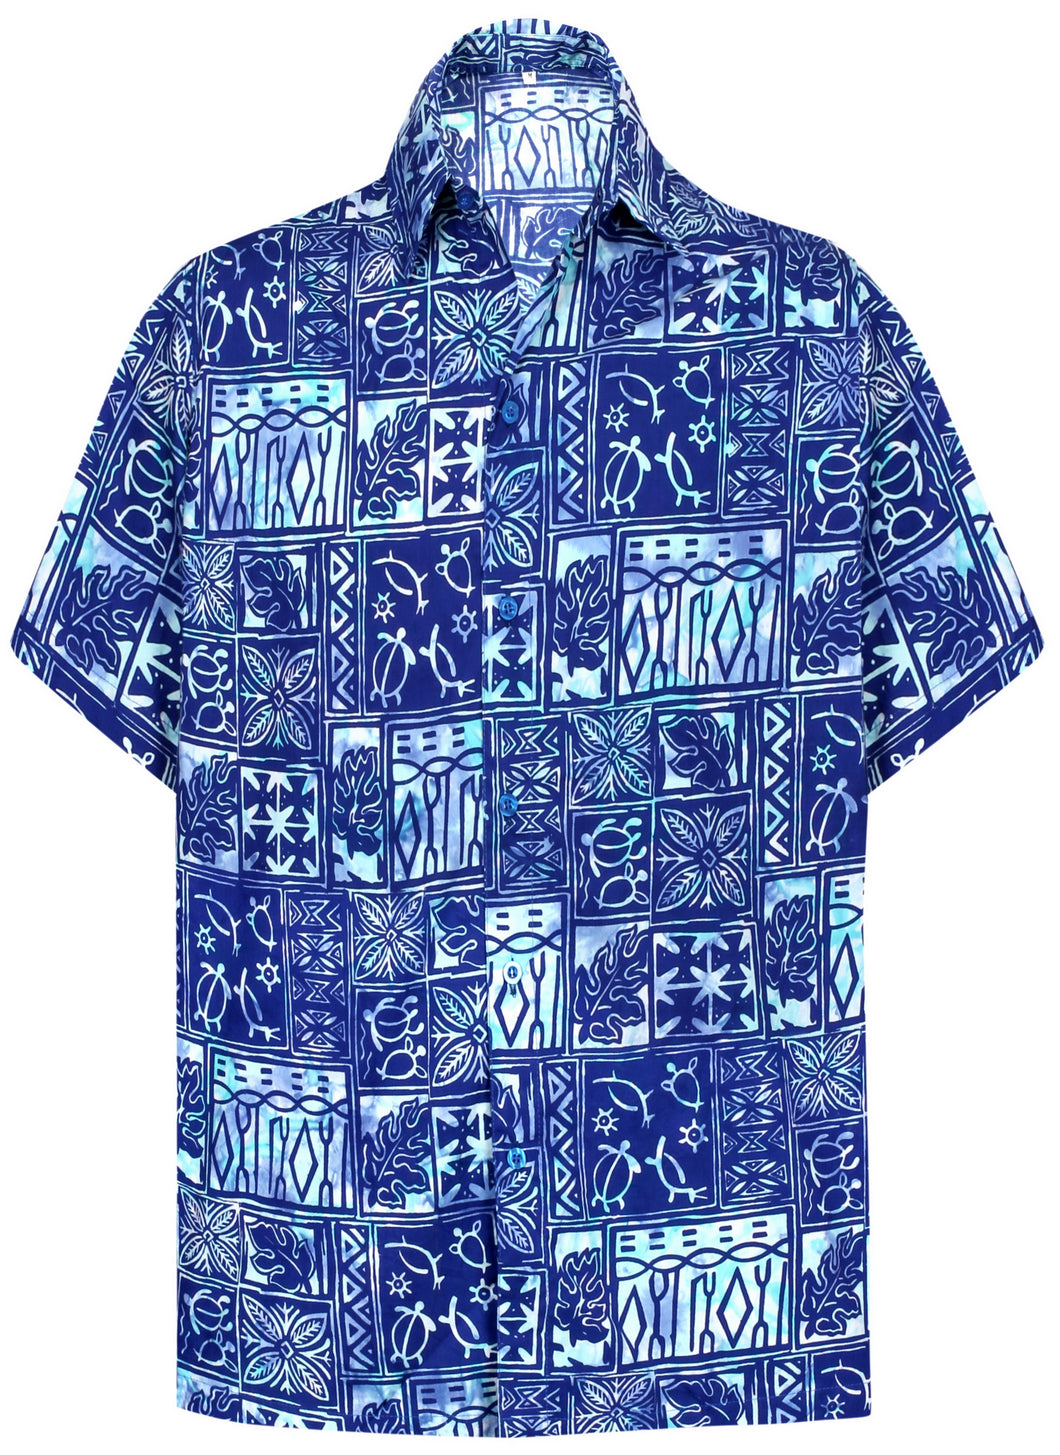 la-leela-men-casual-wear-cotton-hand-printed-royal-blue-hawaiian-shirts-size-s-xxl